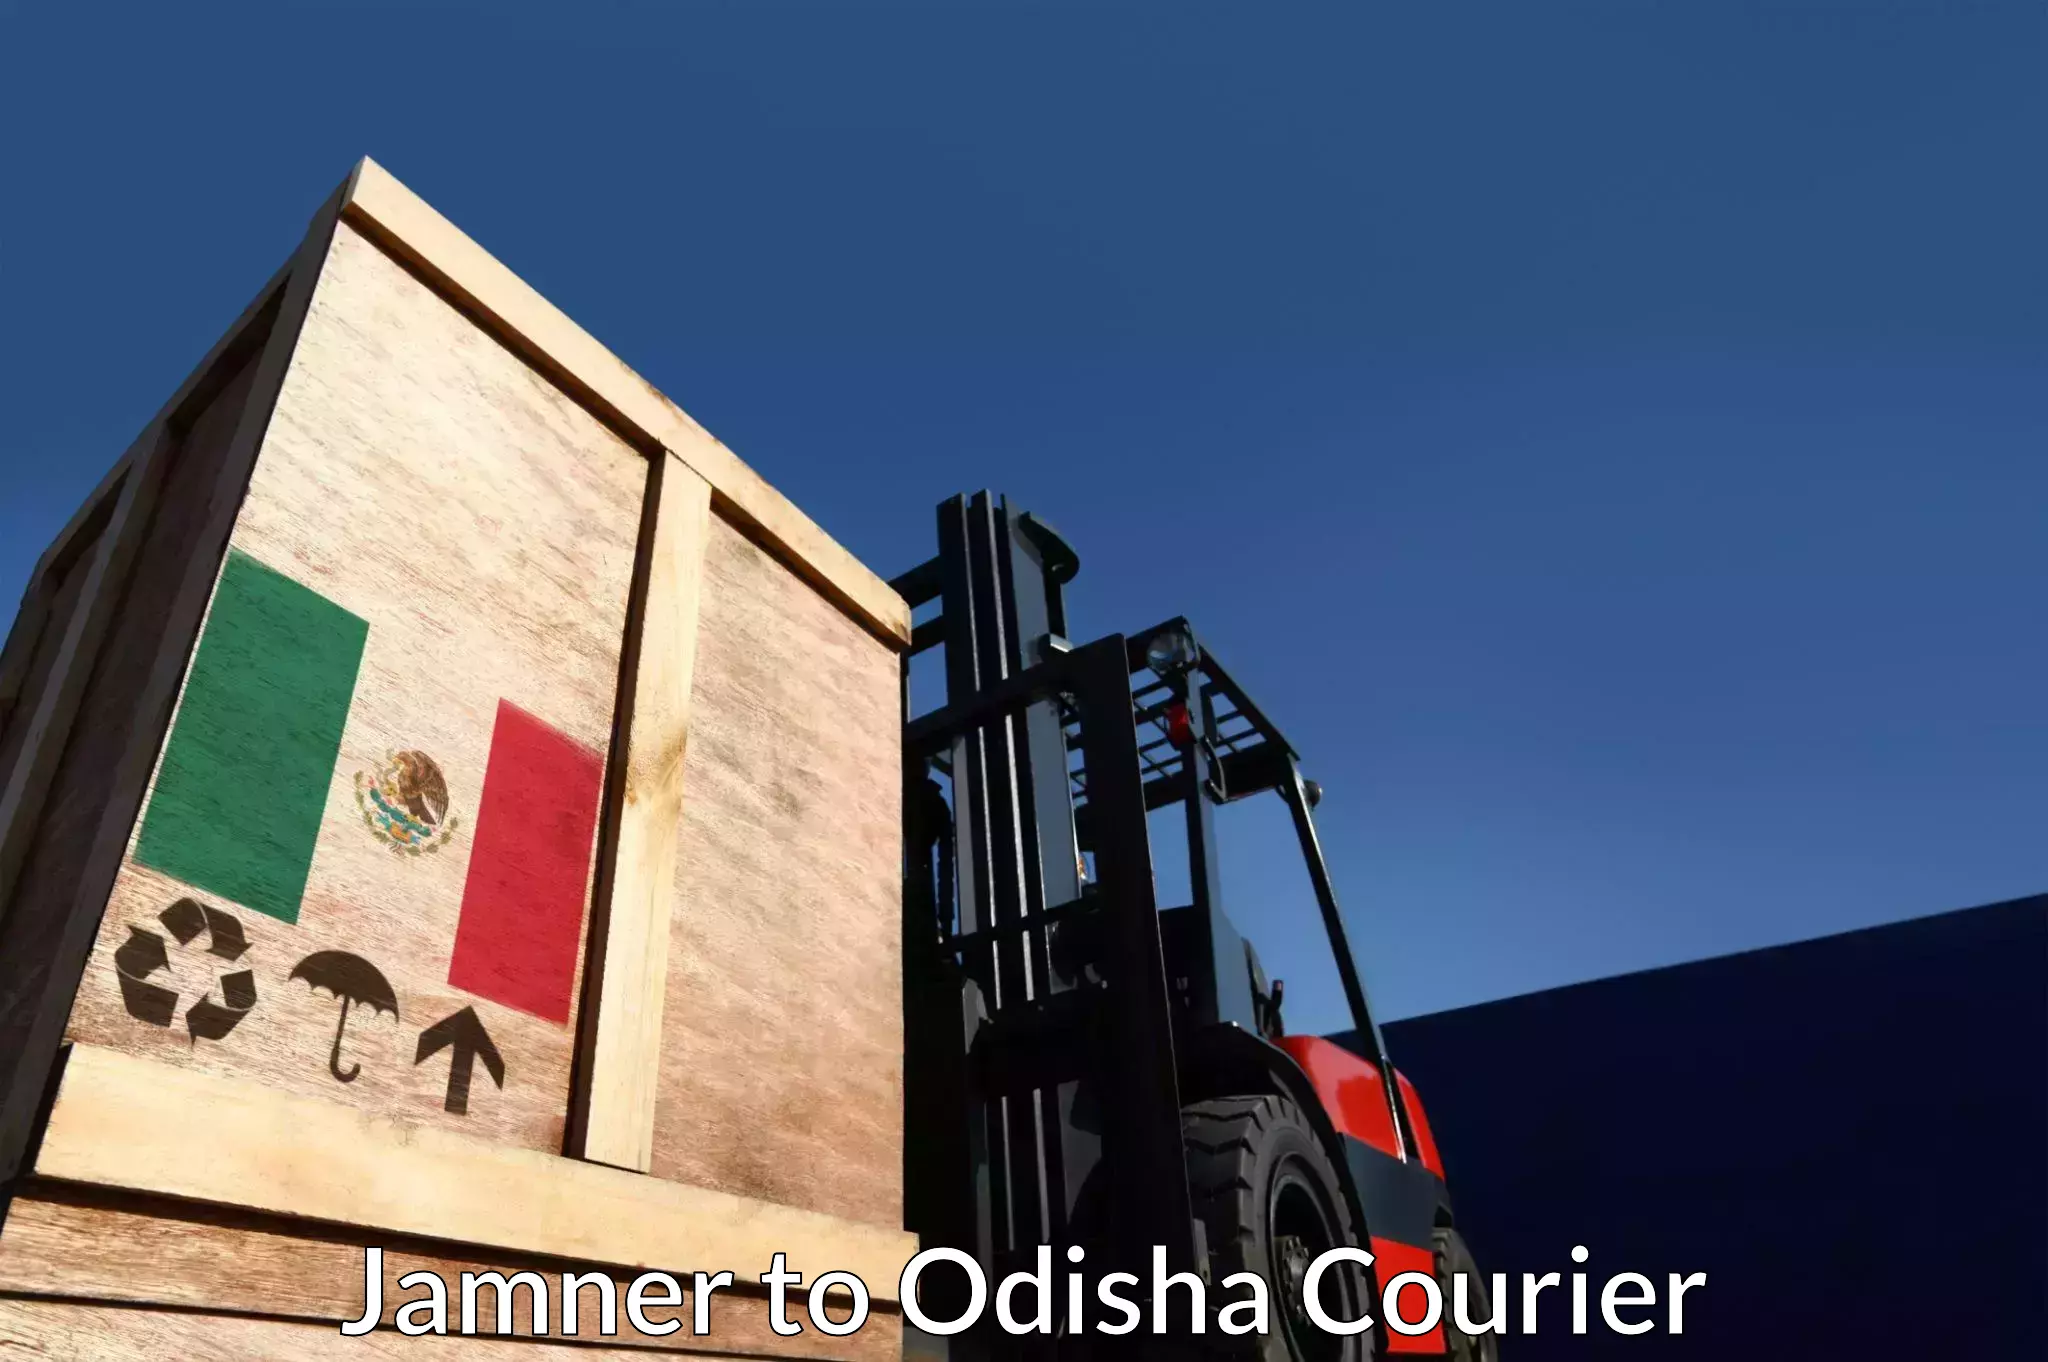 Courier service comparison Jamner to Odisha